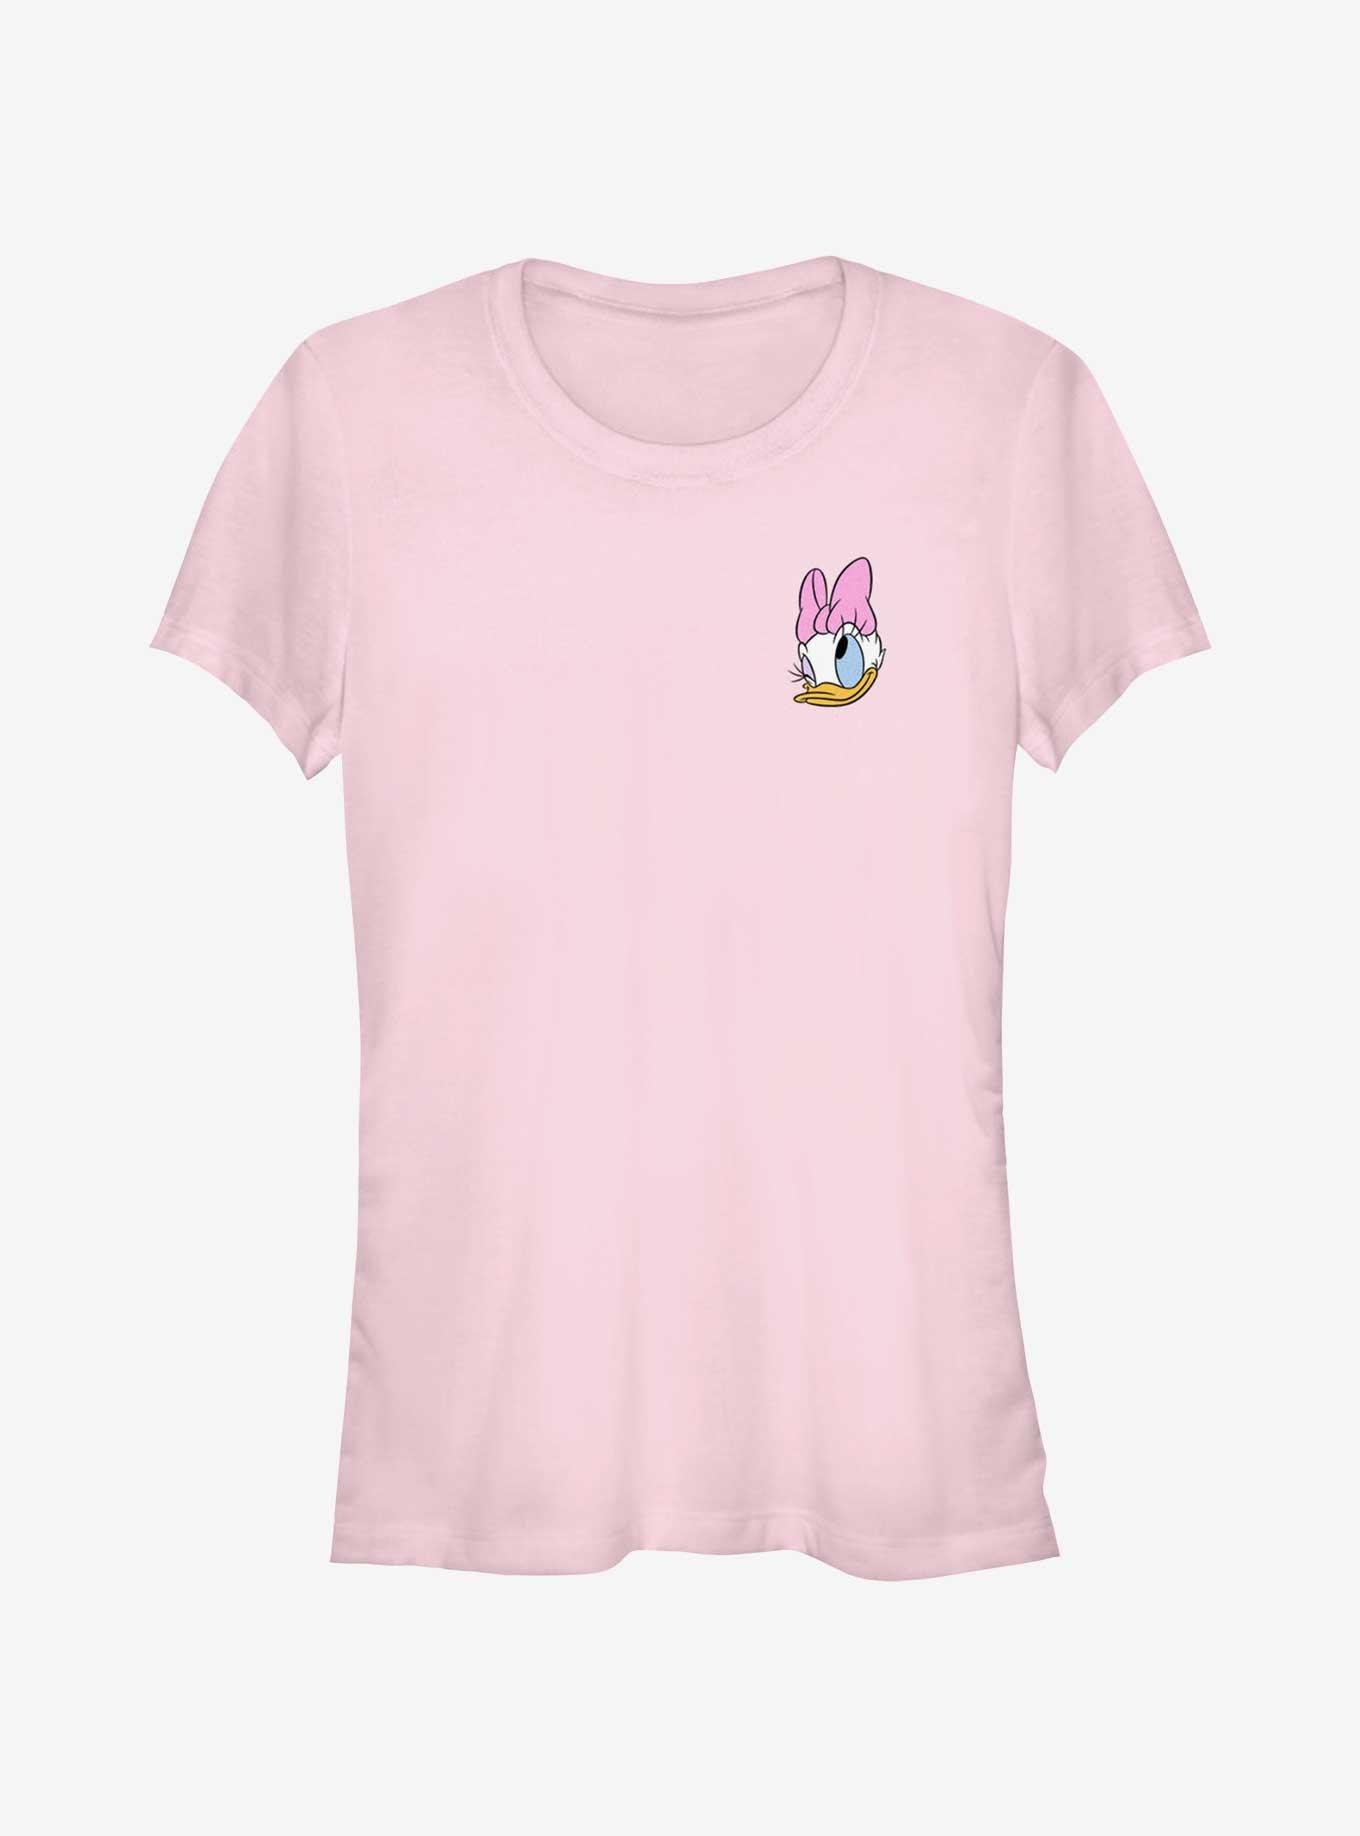 Disney Daisy Duck Big Face Pocket Girls T-Shirt, LIGHT PINK, hi-res